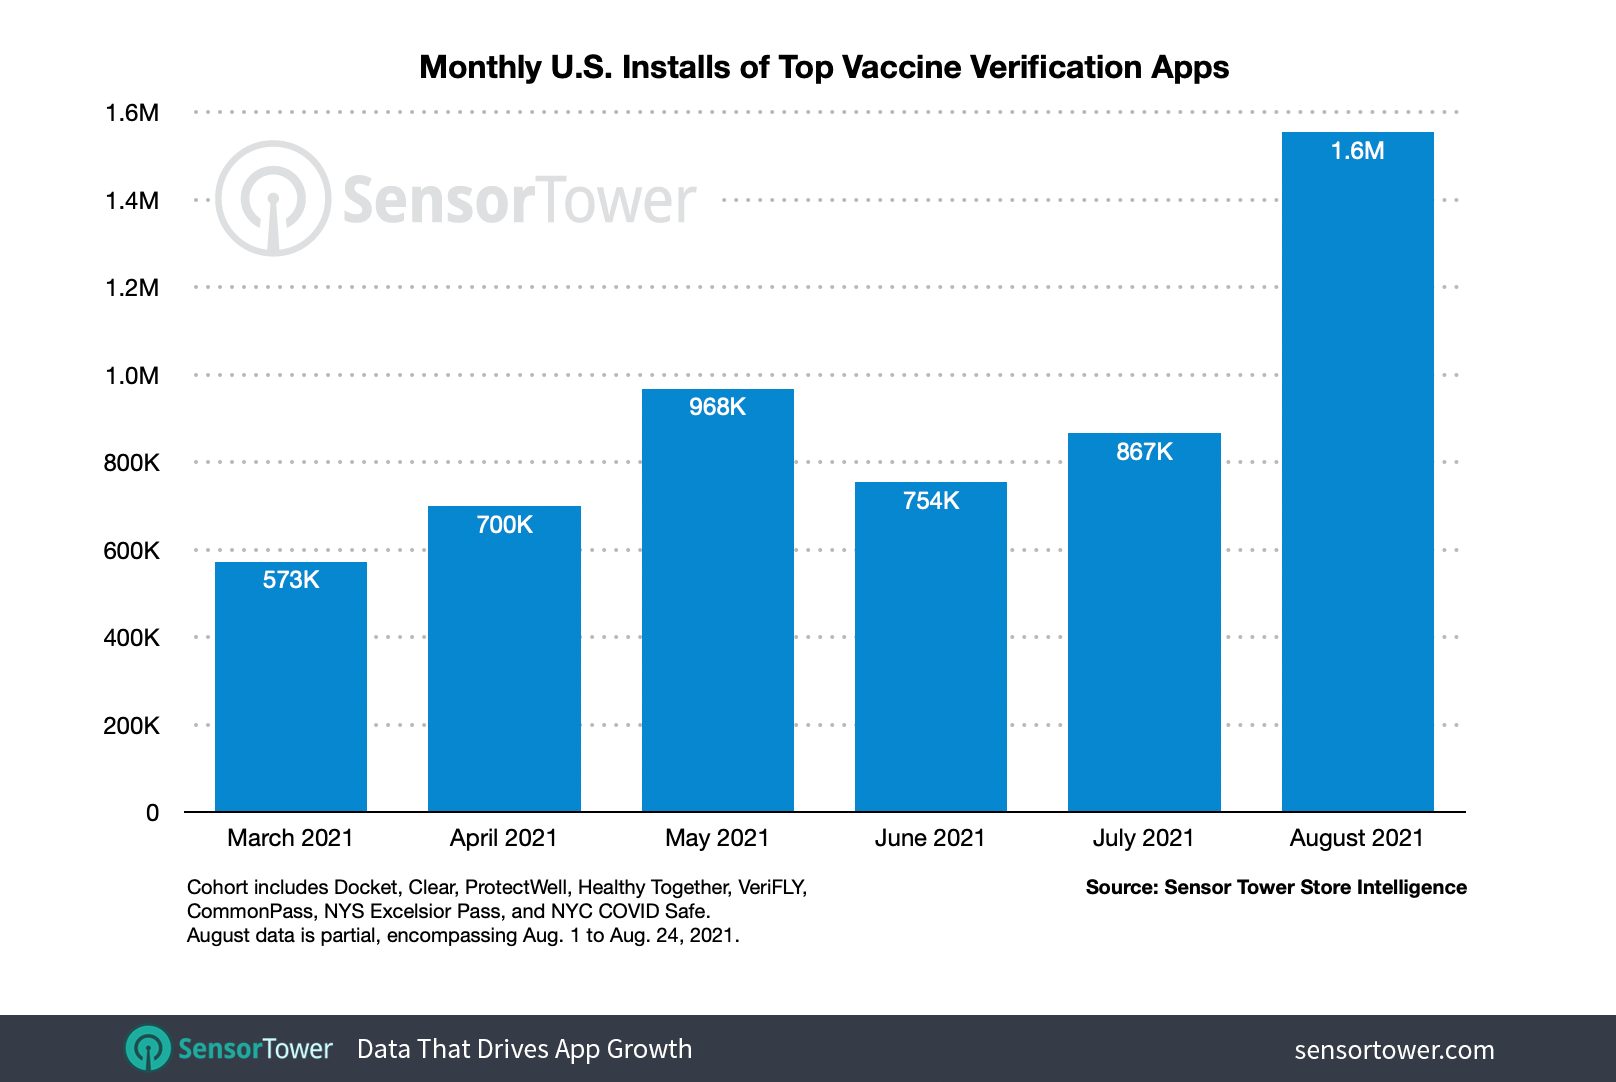 Vaccine verification apps hit 1.6 million installs in August